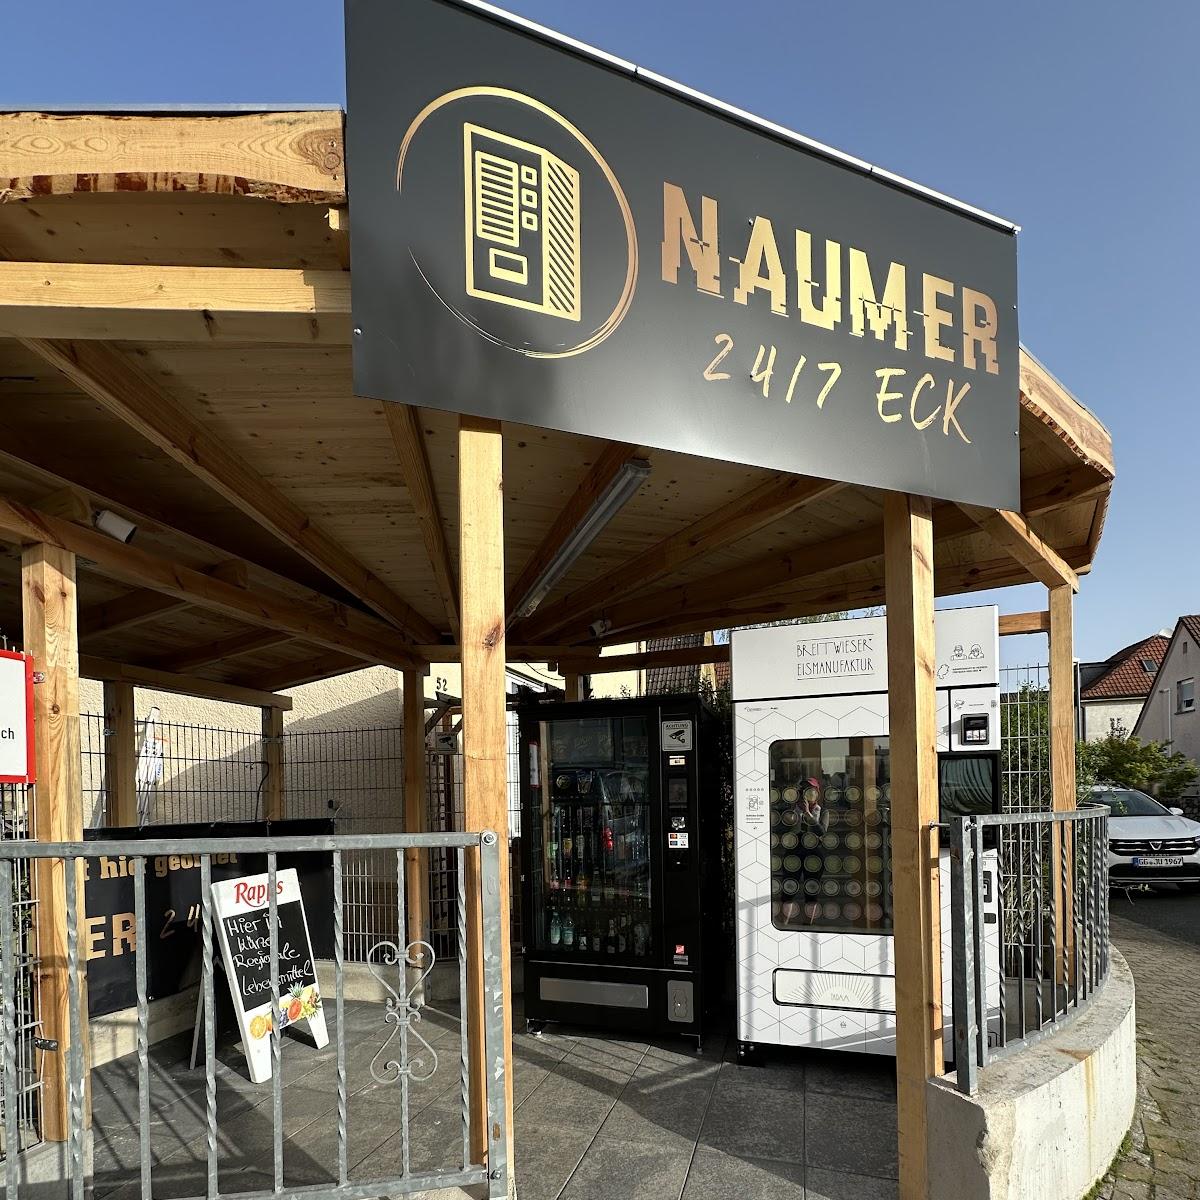 Restaurant "Eisautomat" in Nauheim